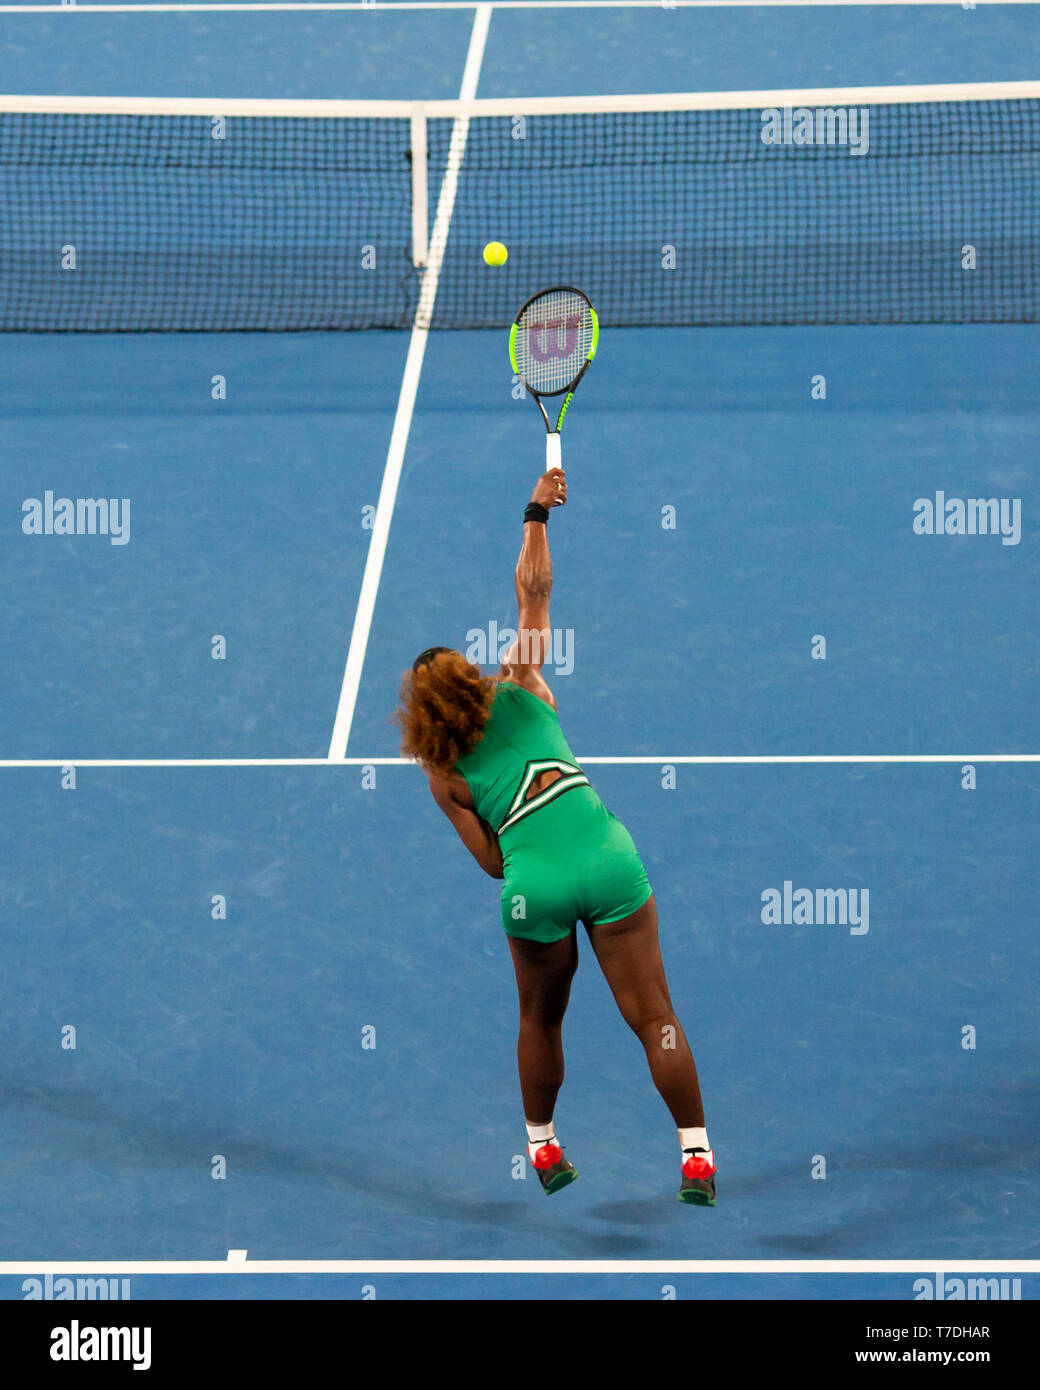 American tennis player Serena Williams serving in Australian Open 2019 tennis tournament, Melbourne Park, Melbourne, Victoria, Australia Stock Photo